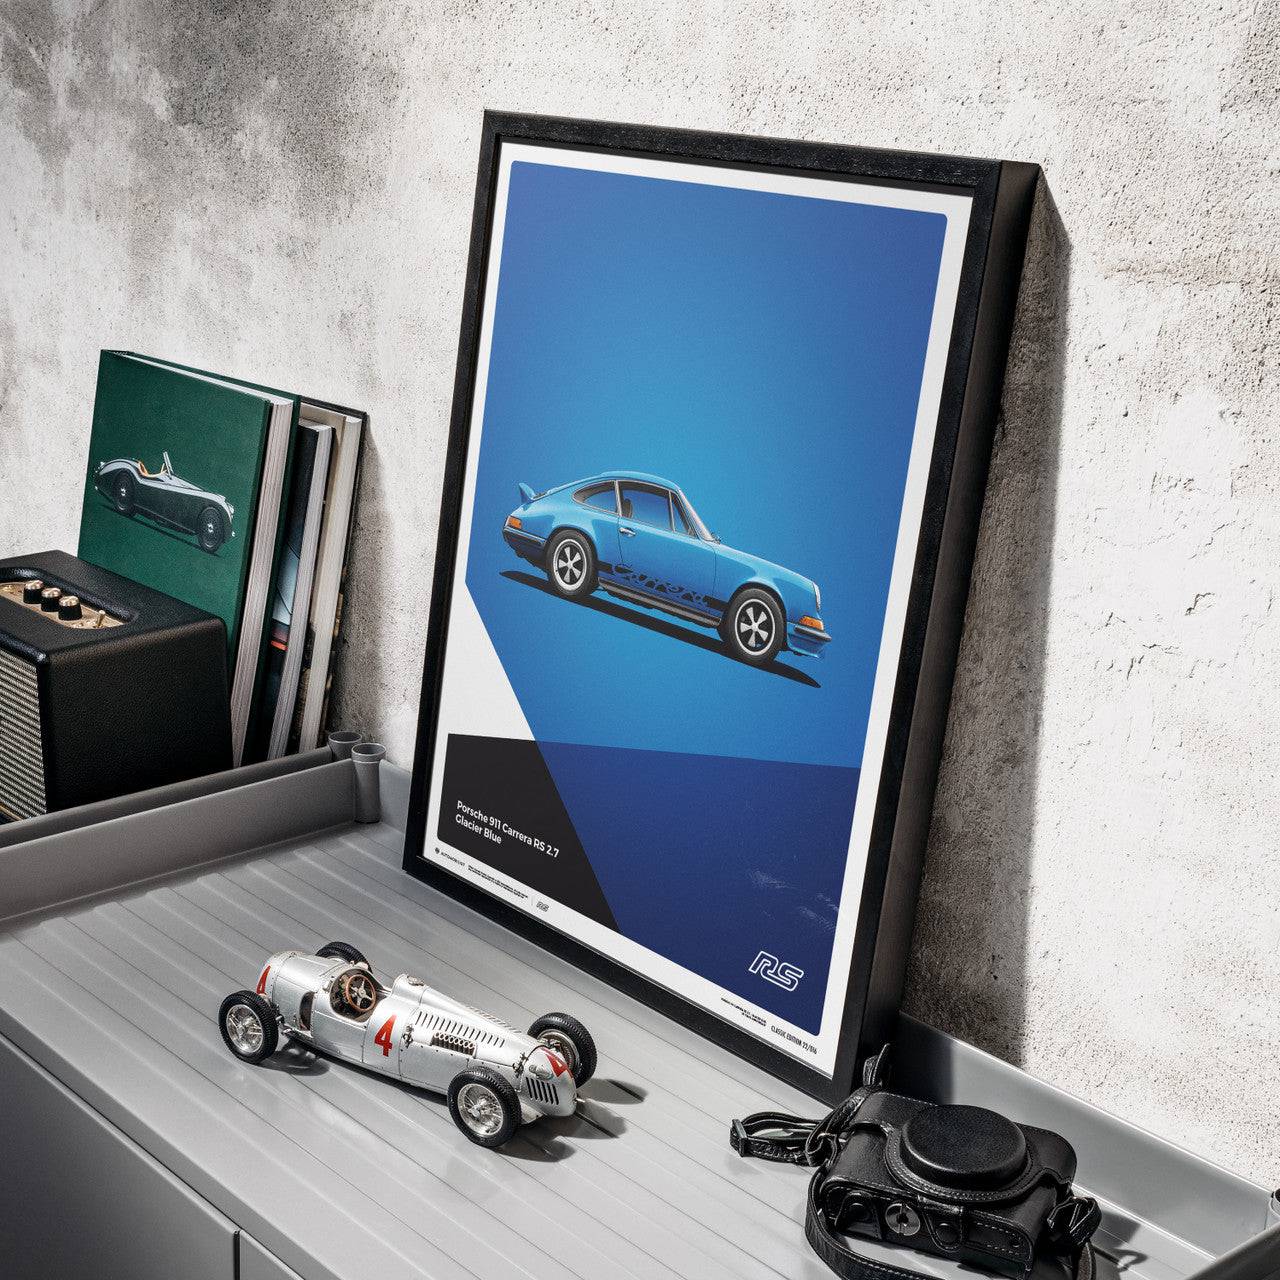 Porsche 911 RS - Blue - Limited Poster